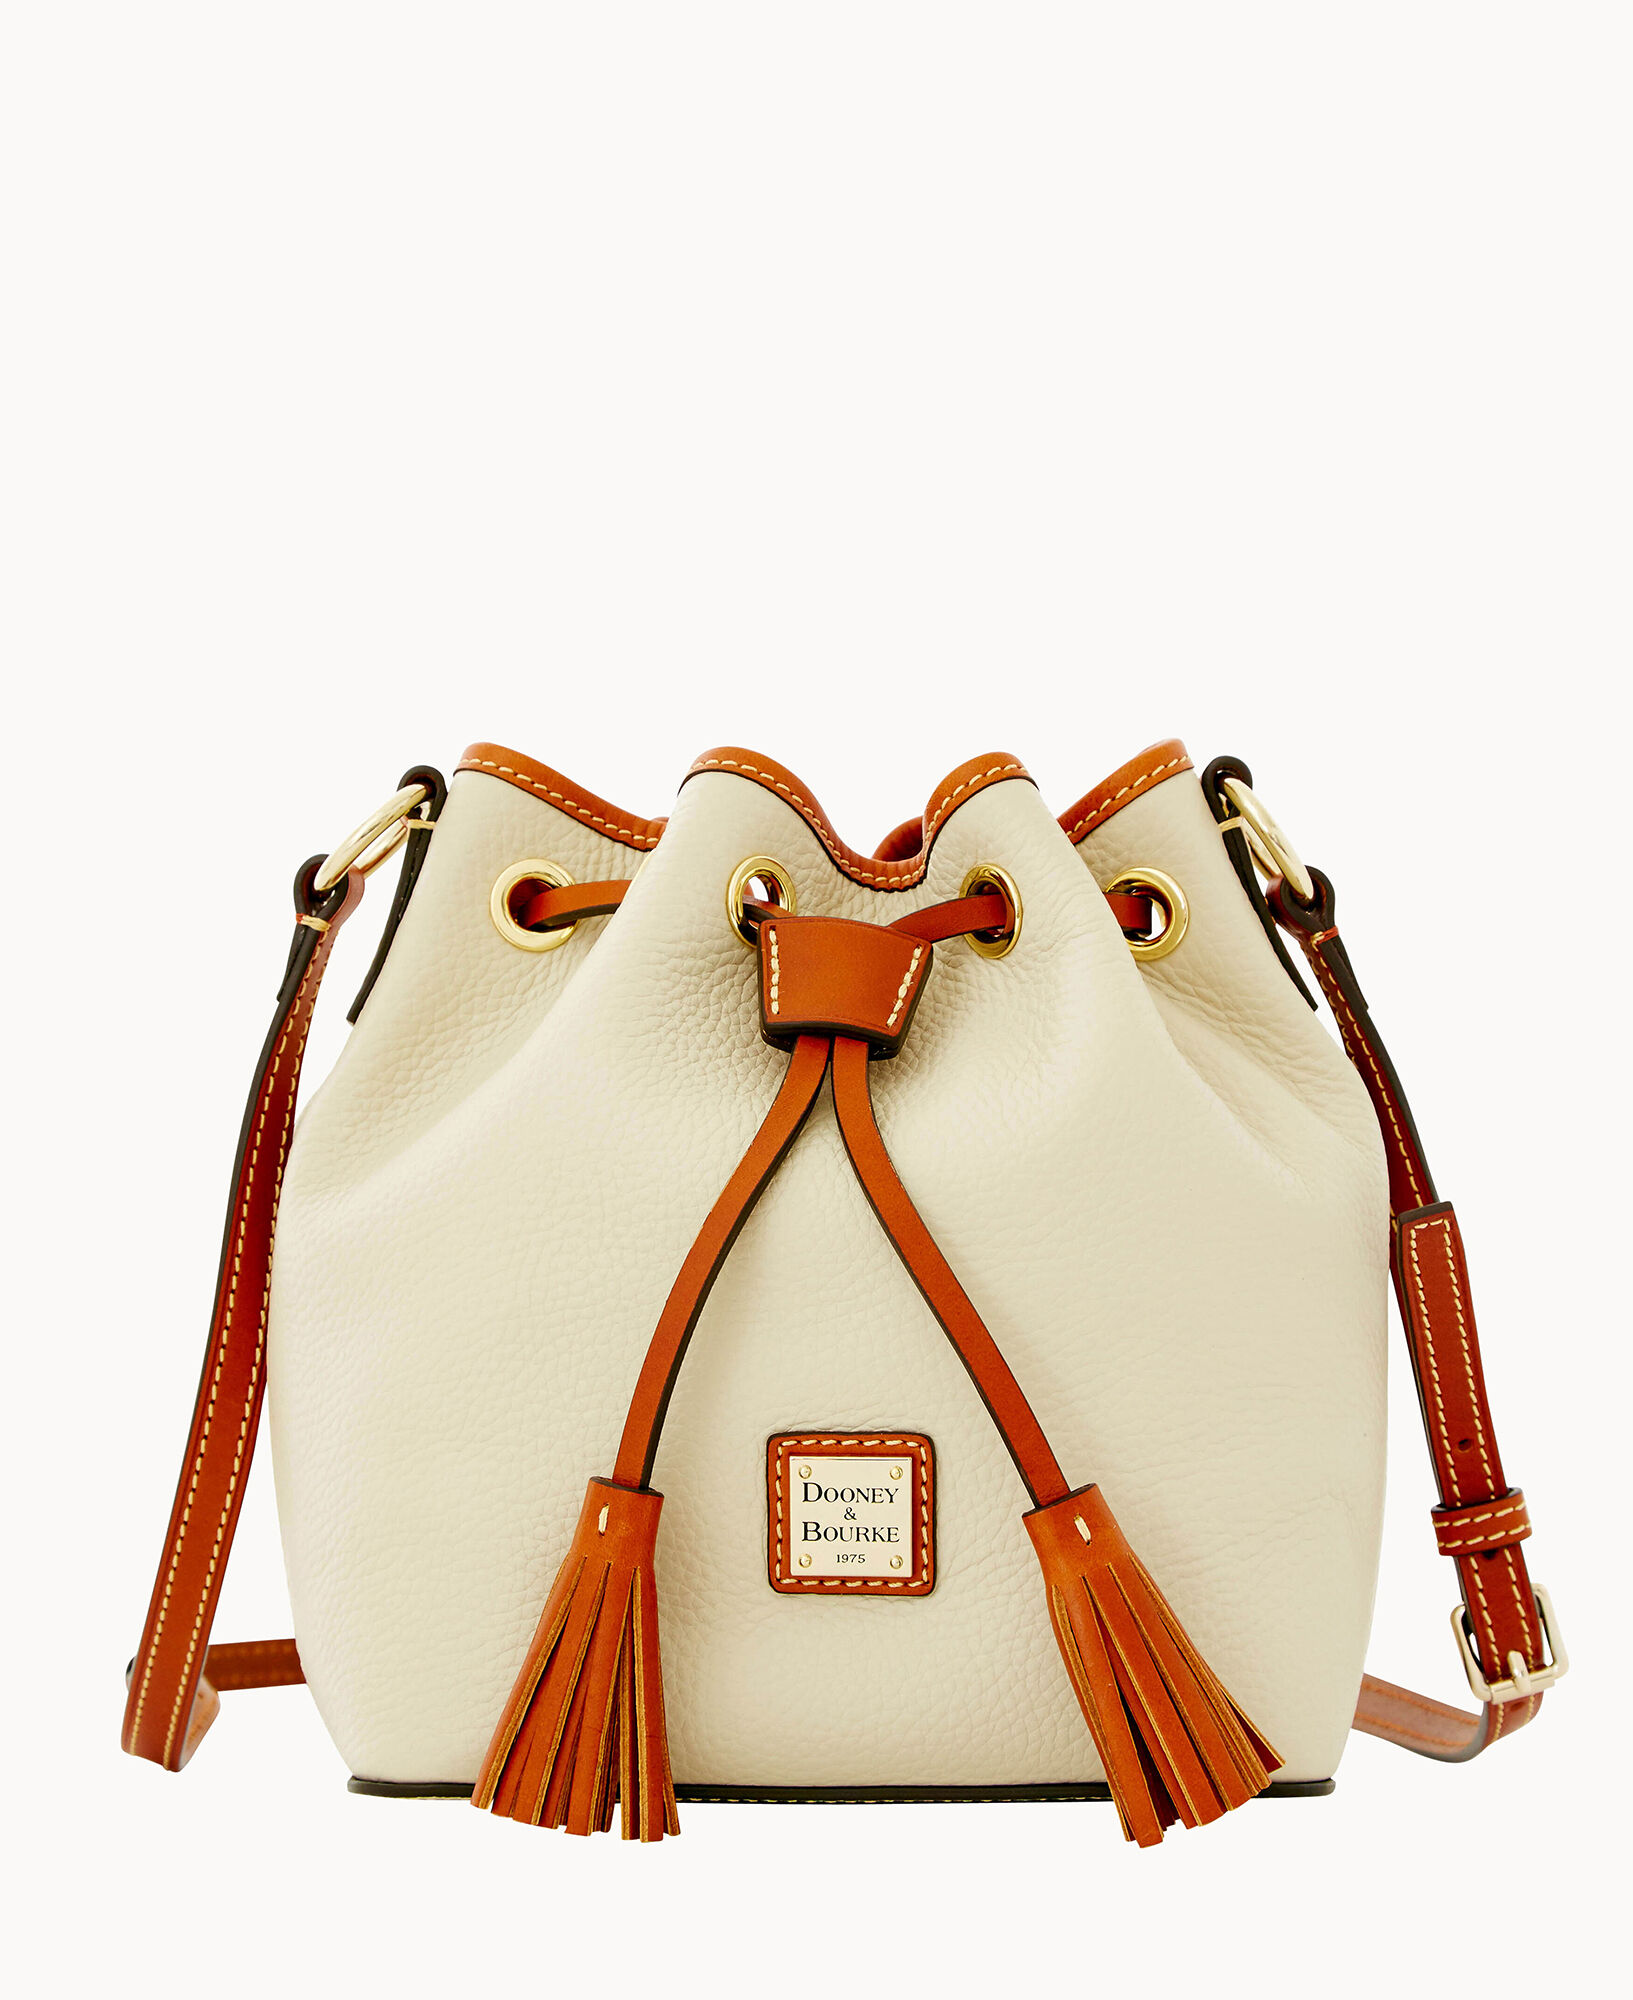 Dooney & Bourke Kendall Crossbody Bag - $120 - From ReLove